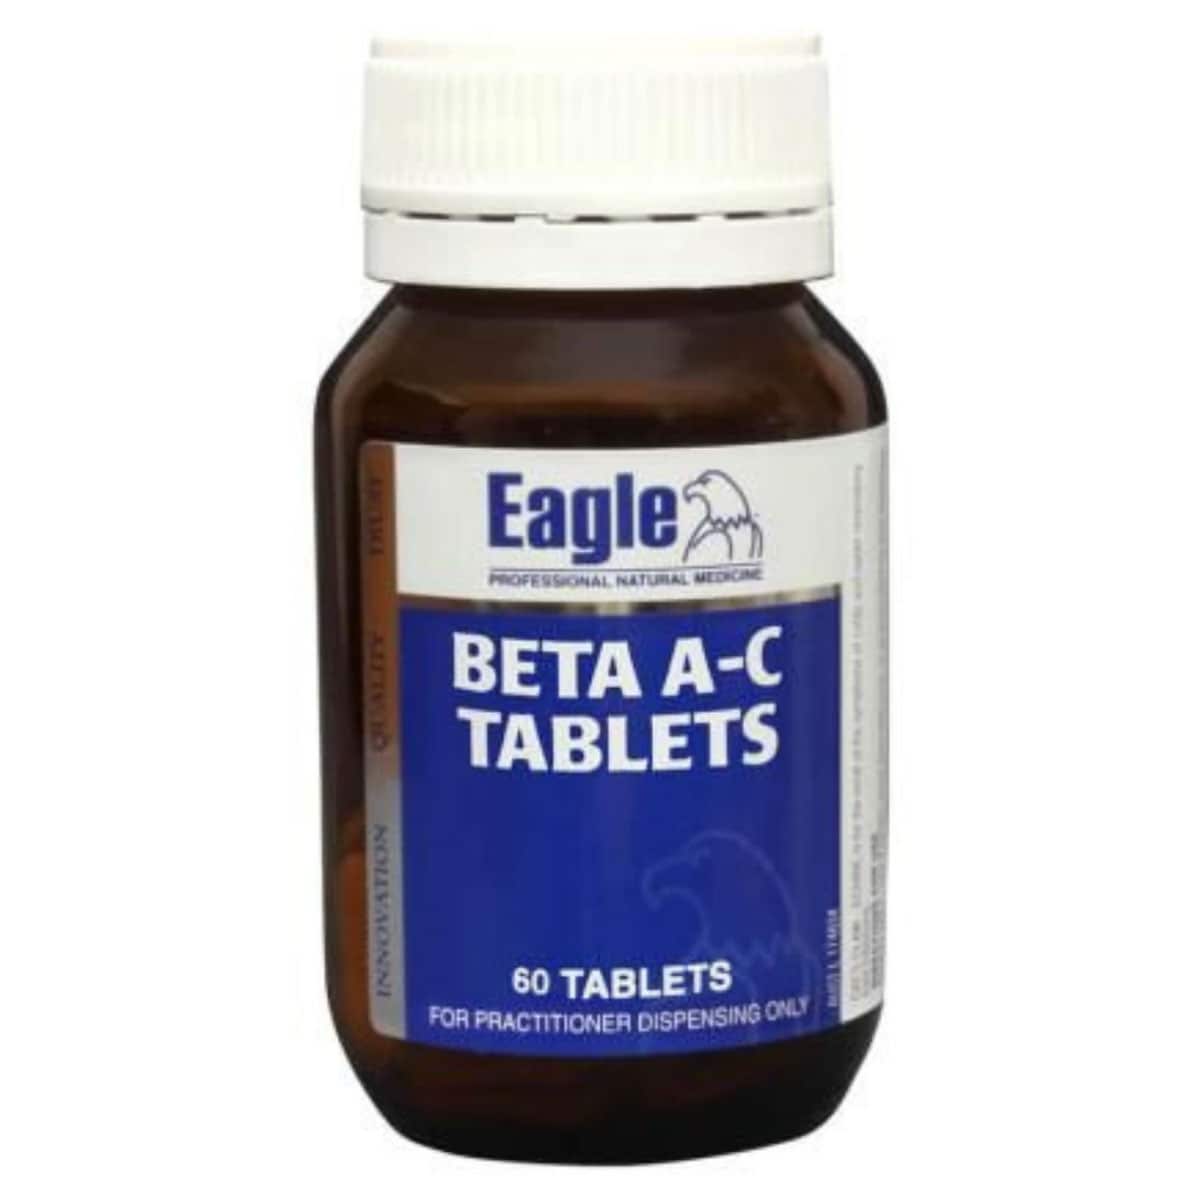 Eagle Beta A-C Tablets 60 Tablets